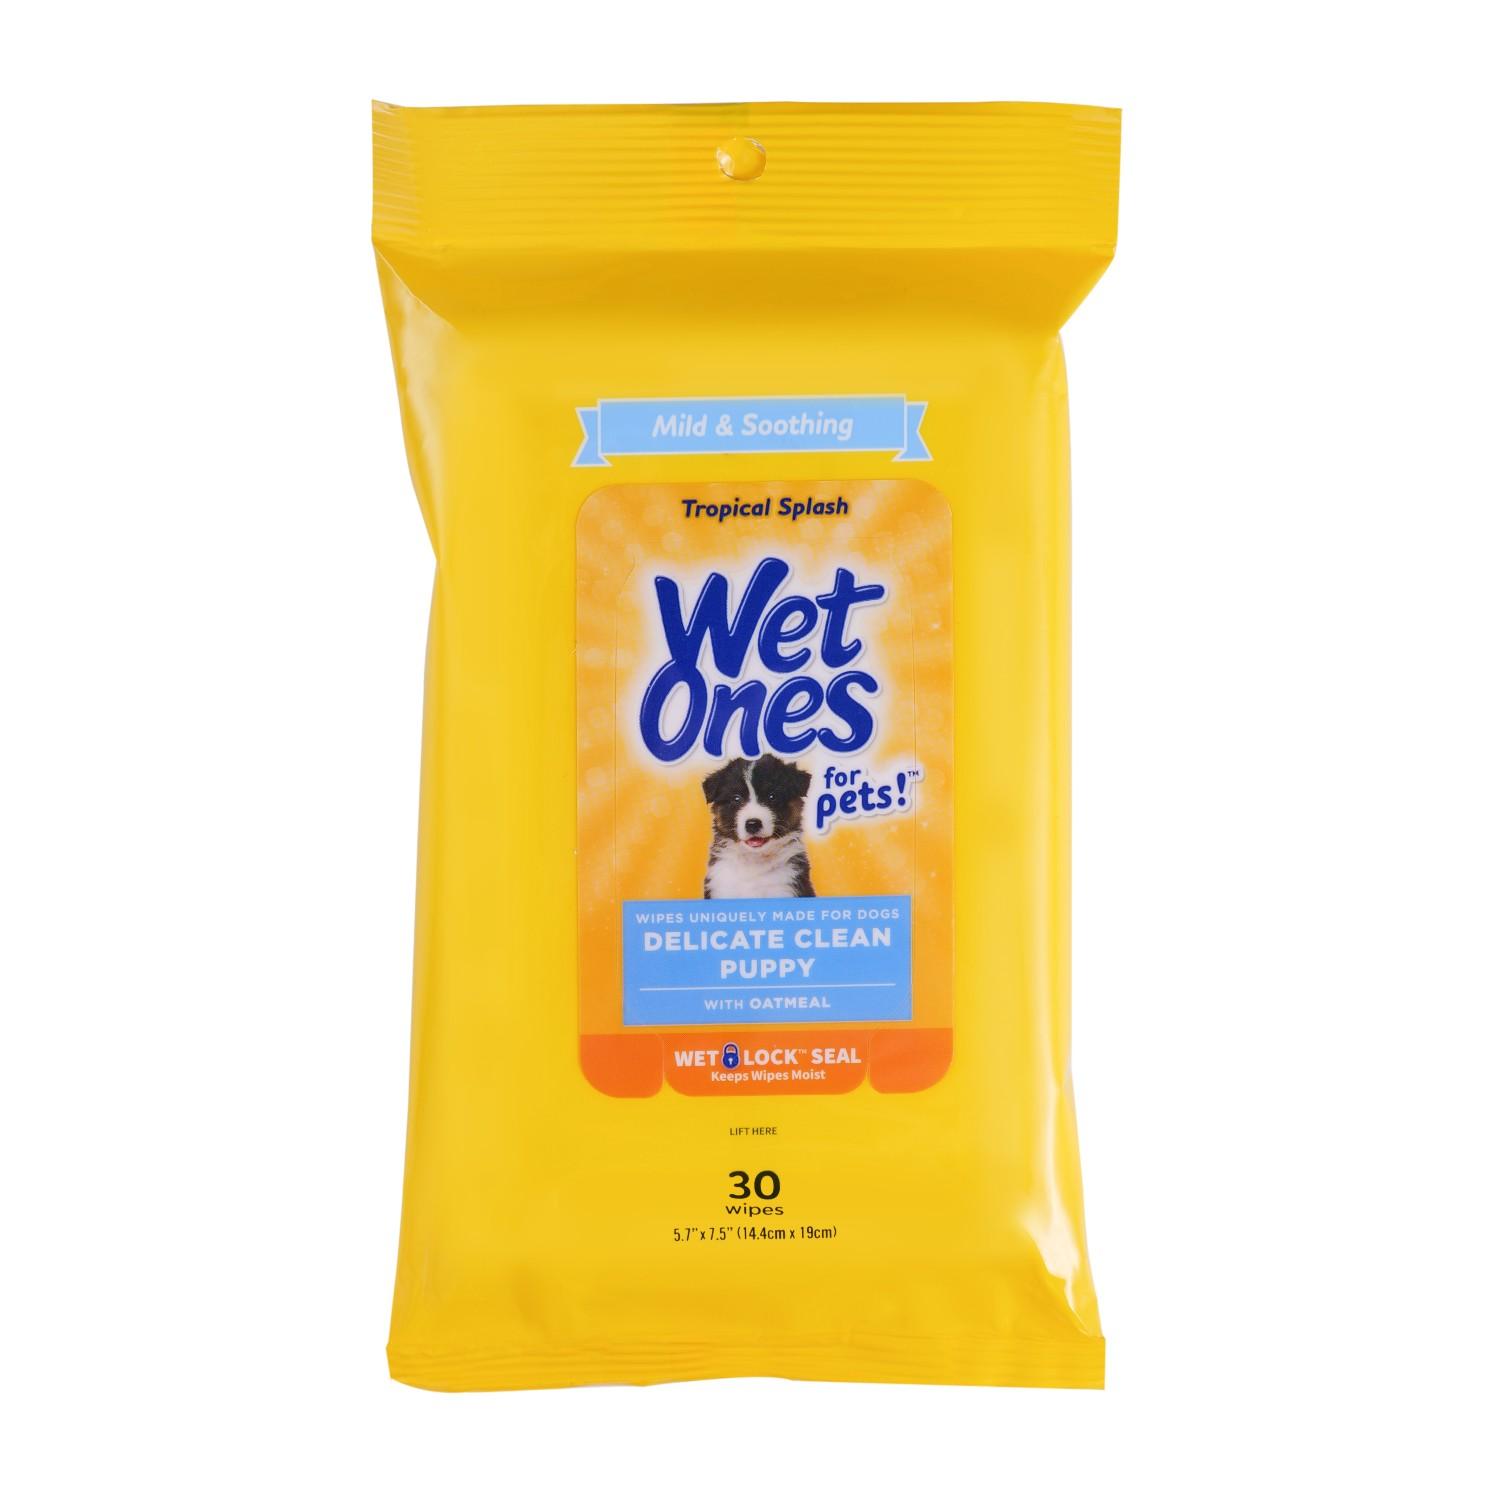 Wet Ones Delicate Clean Puppy Wipes - Tropical Splash